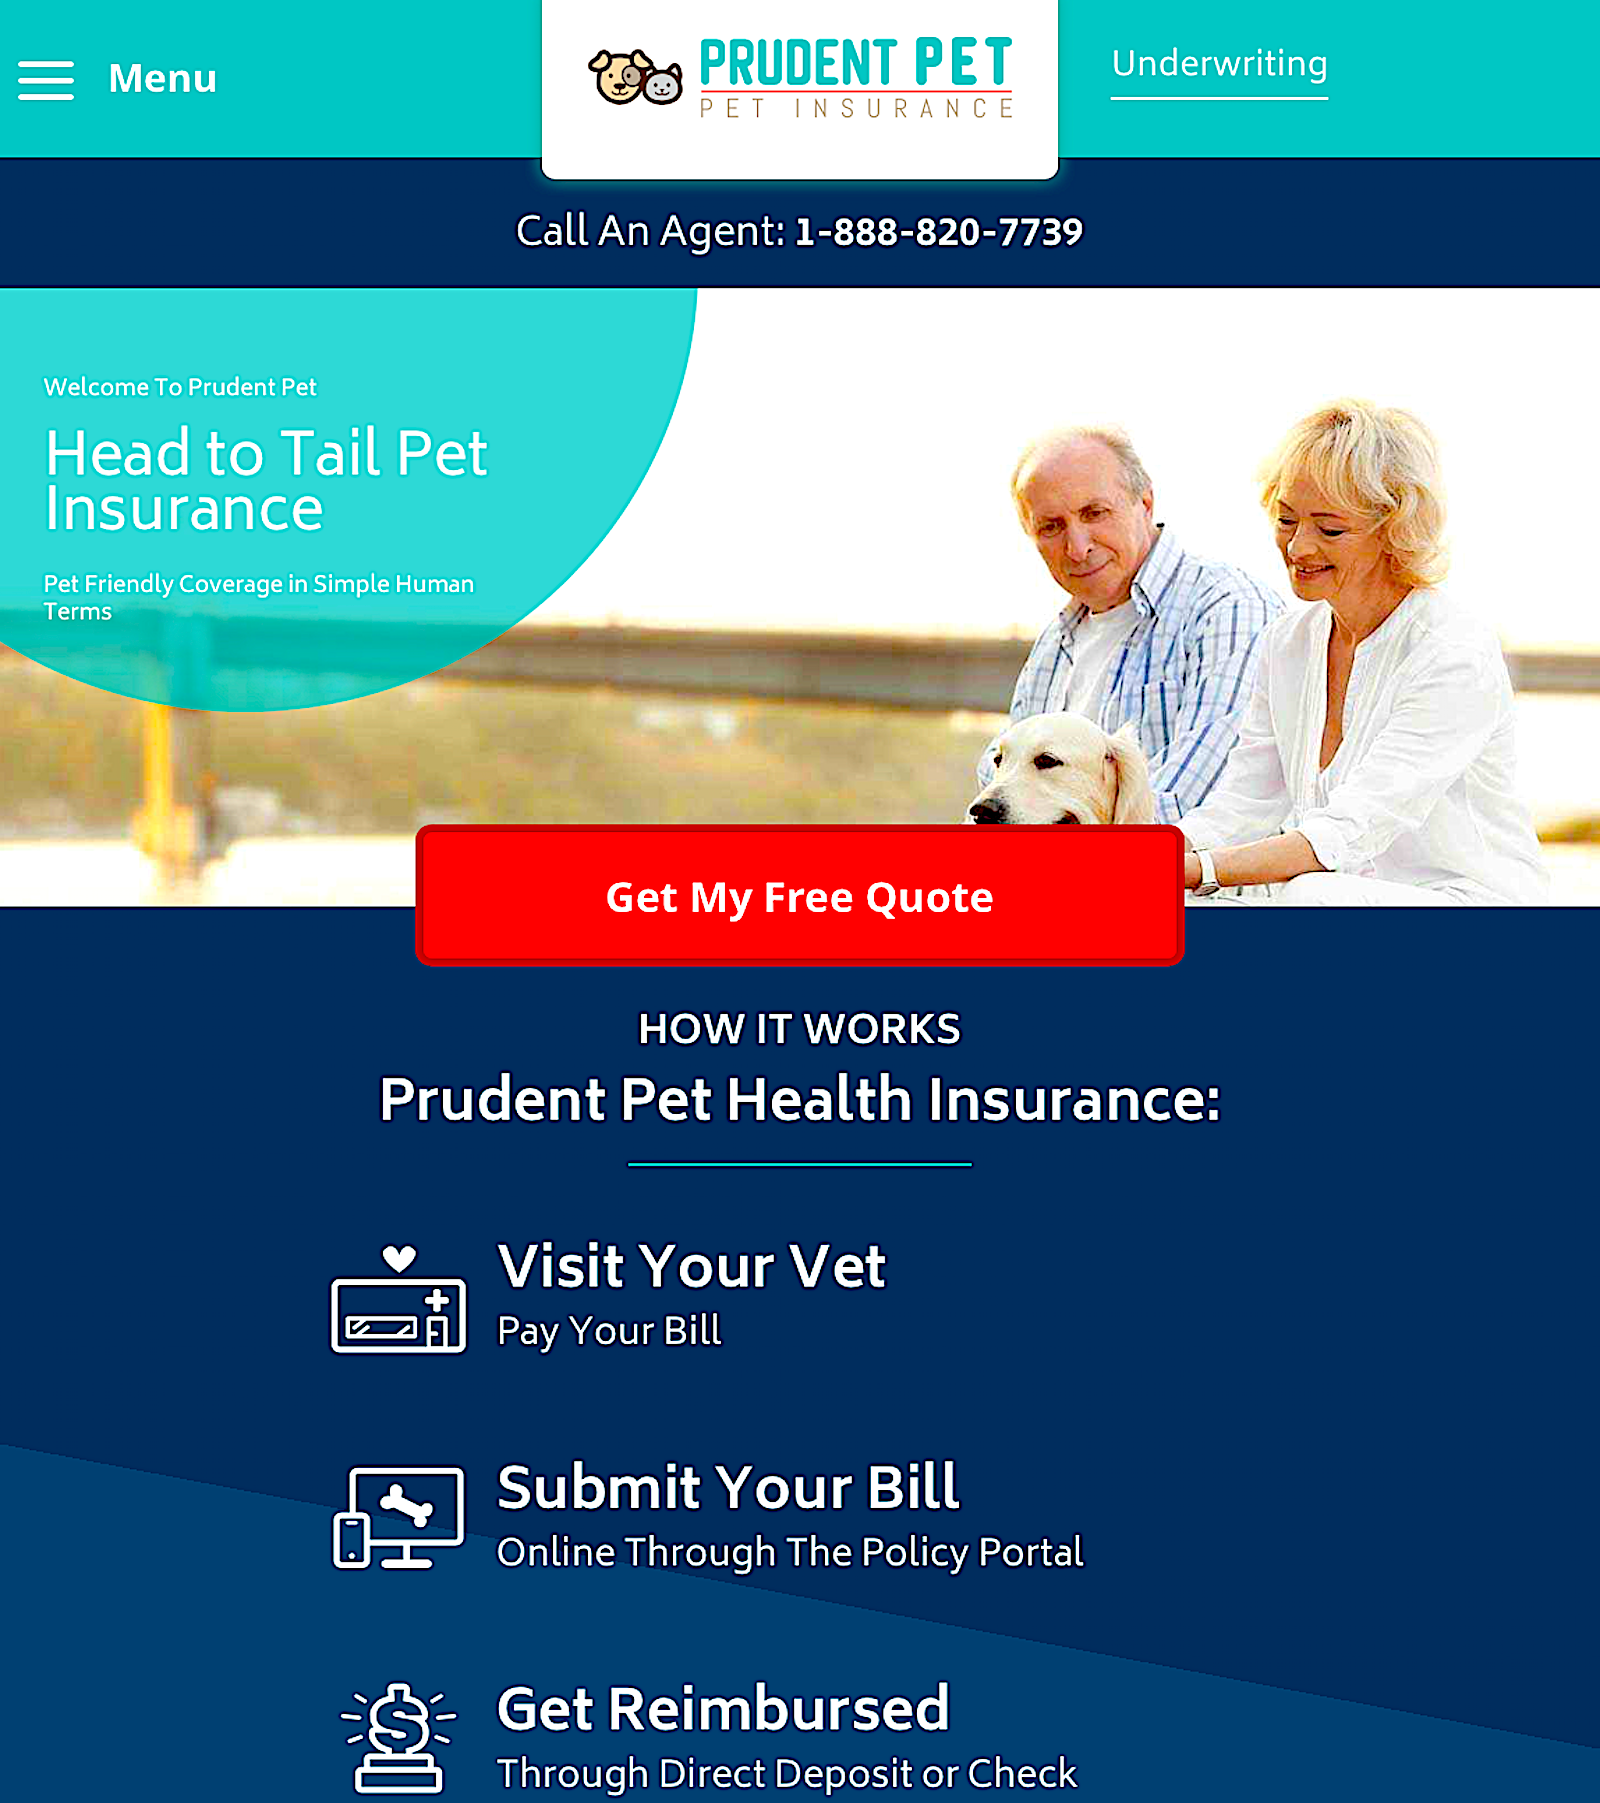 PRUDENT PET INSURANCE: we work with all US-based veterinarians - Vital Vet